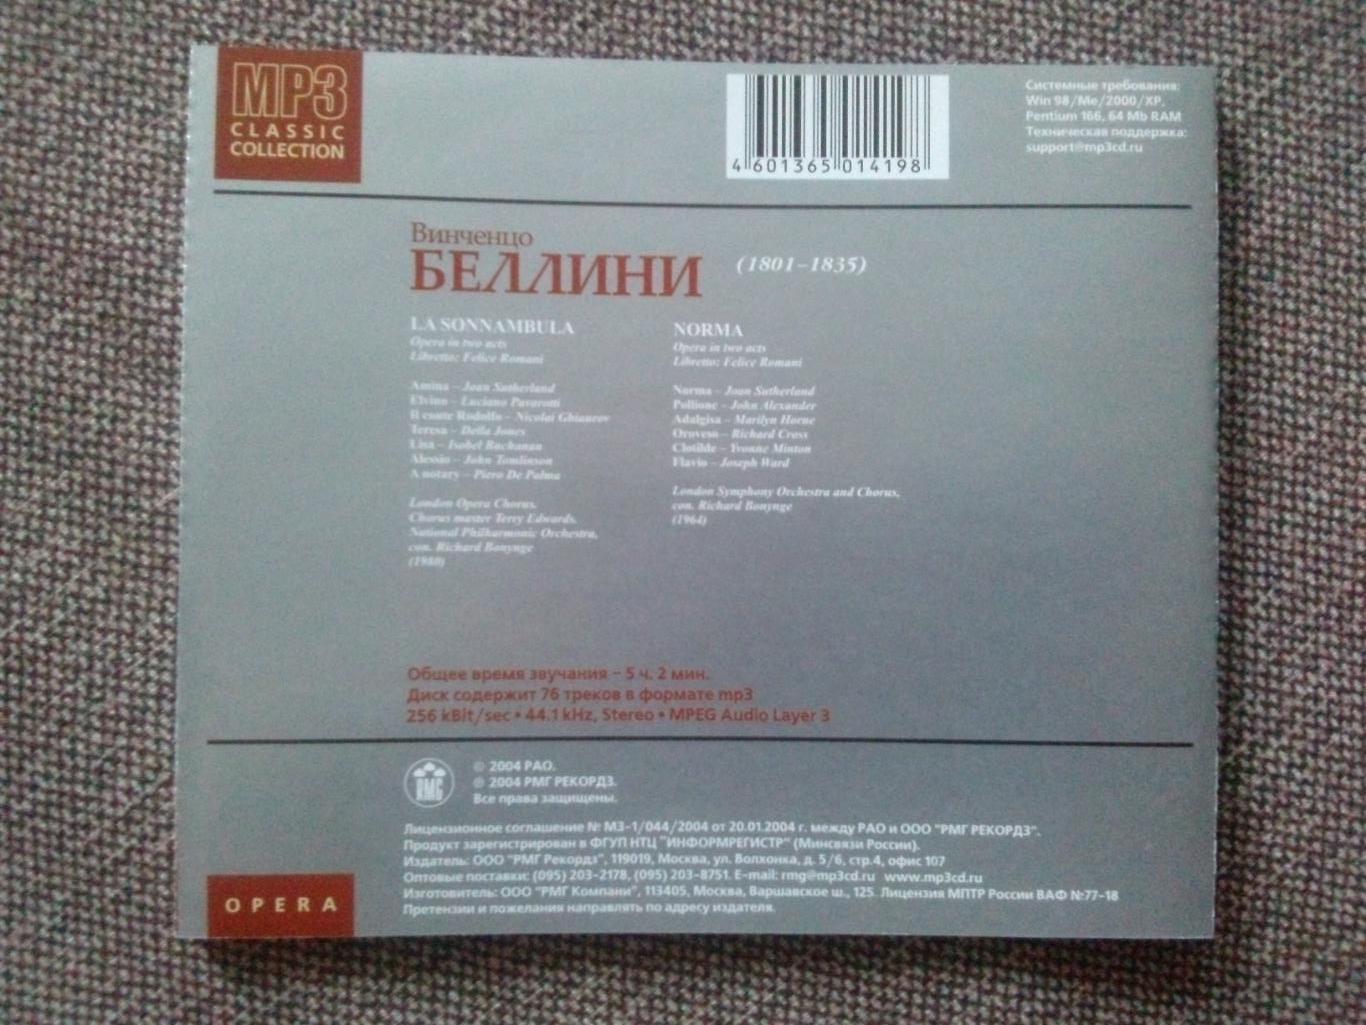 MP - 3 CD диск : Винченцо Беллини - Сомнамбула + Норма (классическая музыка) 7